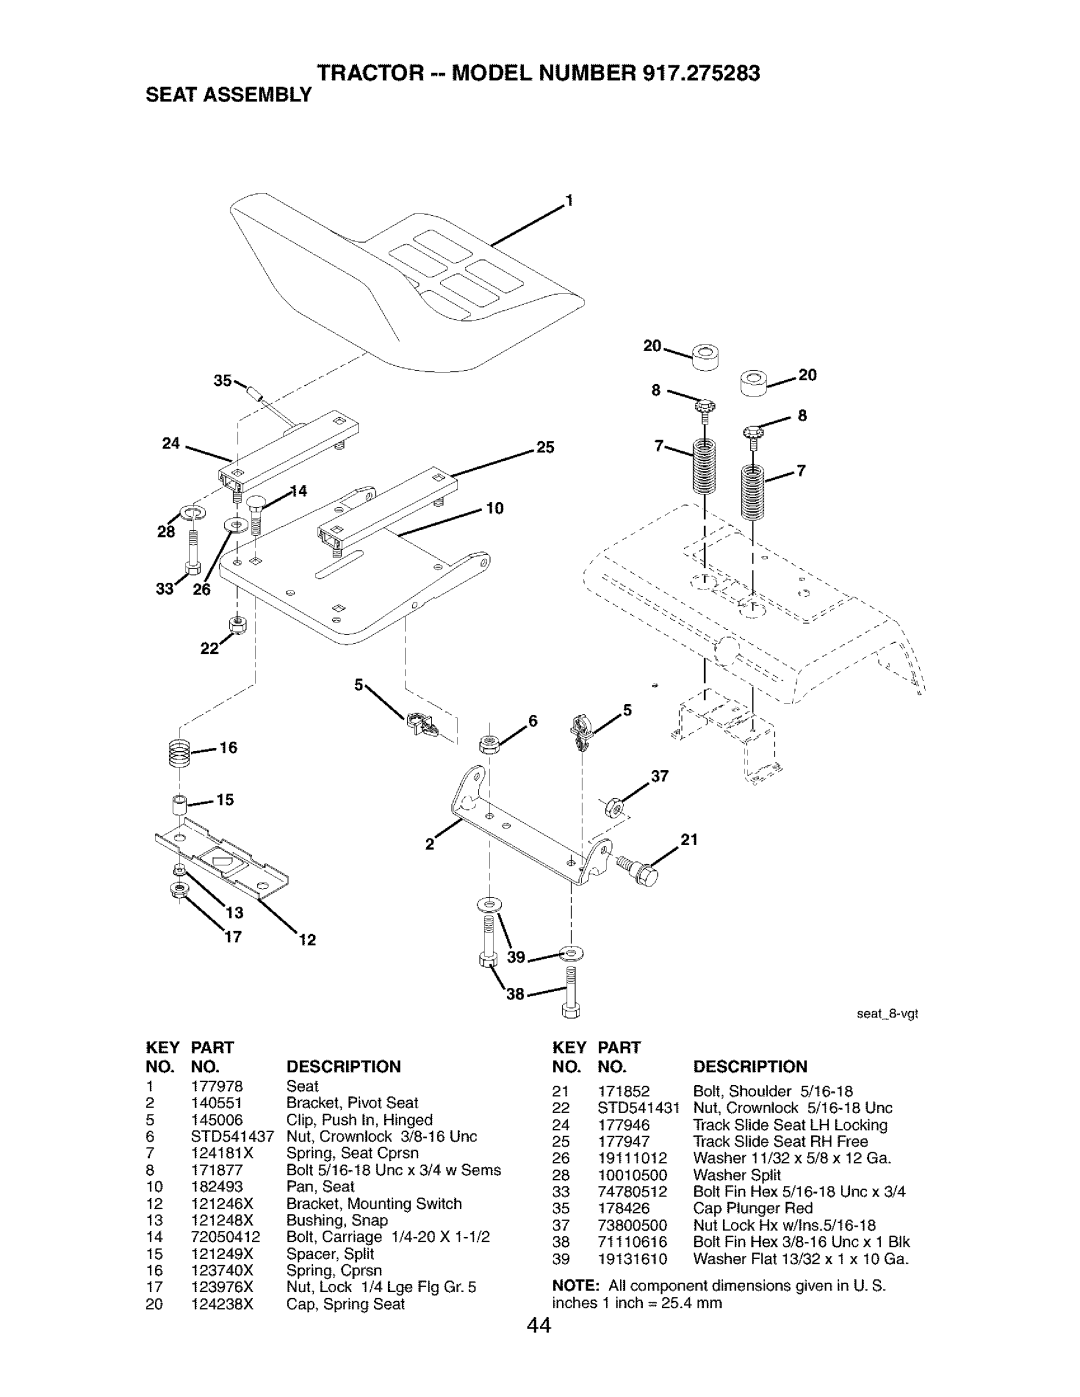 Craftsman 917.275283 owner manual Tractor --Model Number Seat Assembly, Key Part No. No.Description 